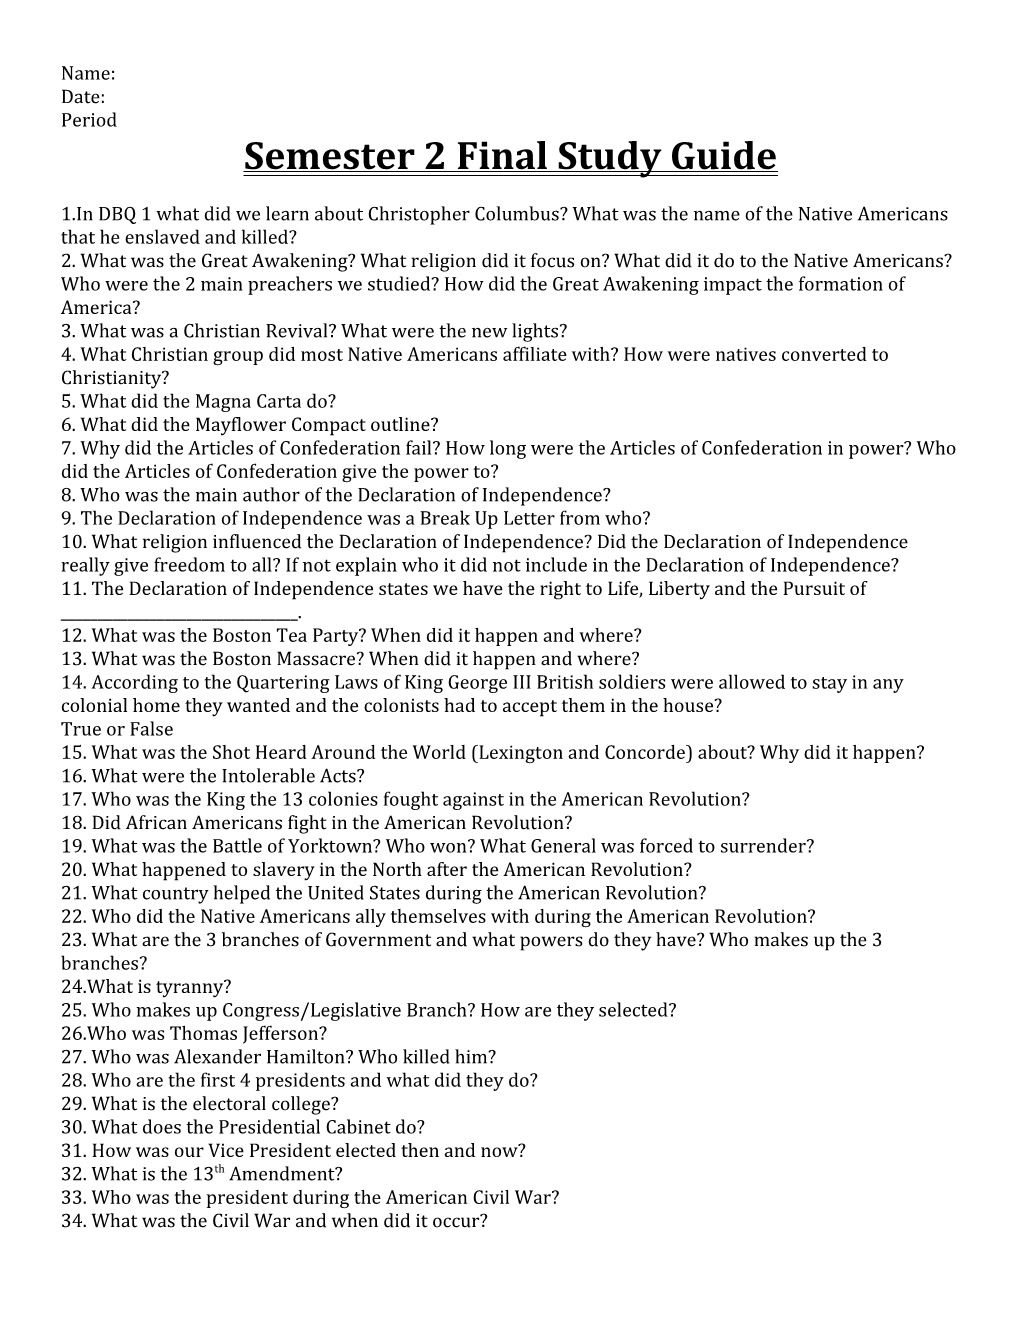 Semester 2 Final Study Guide